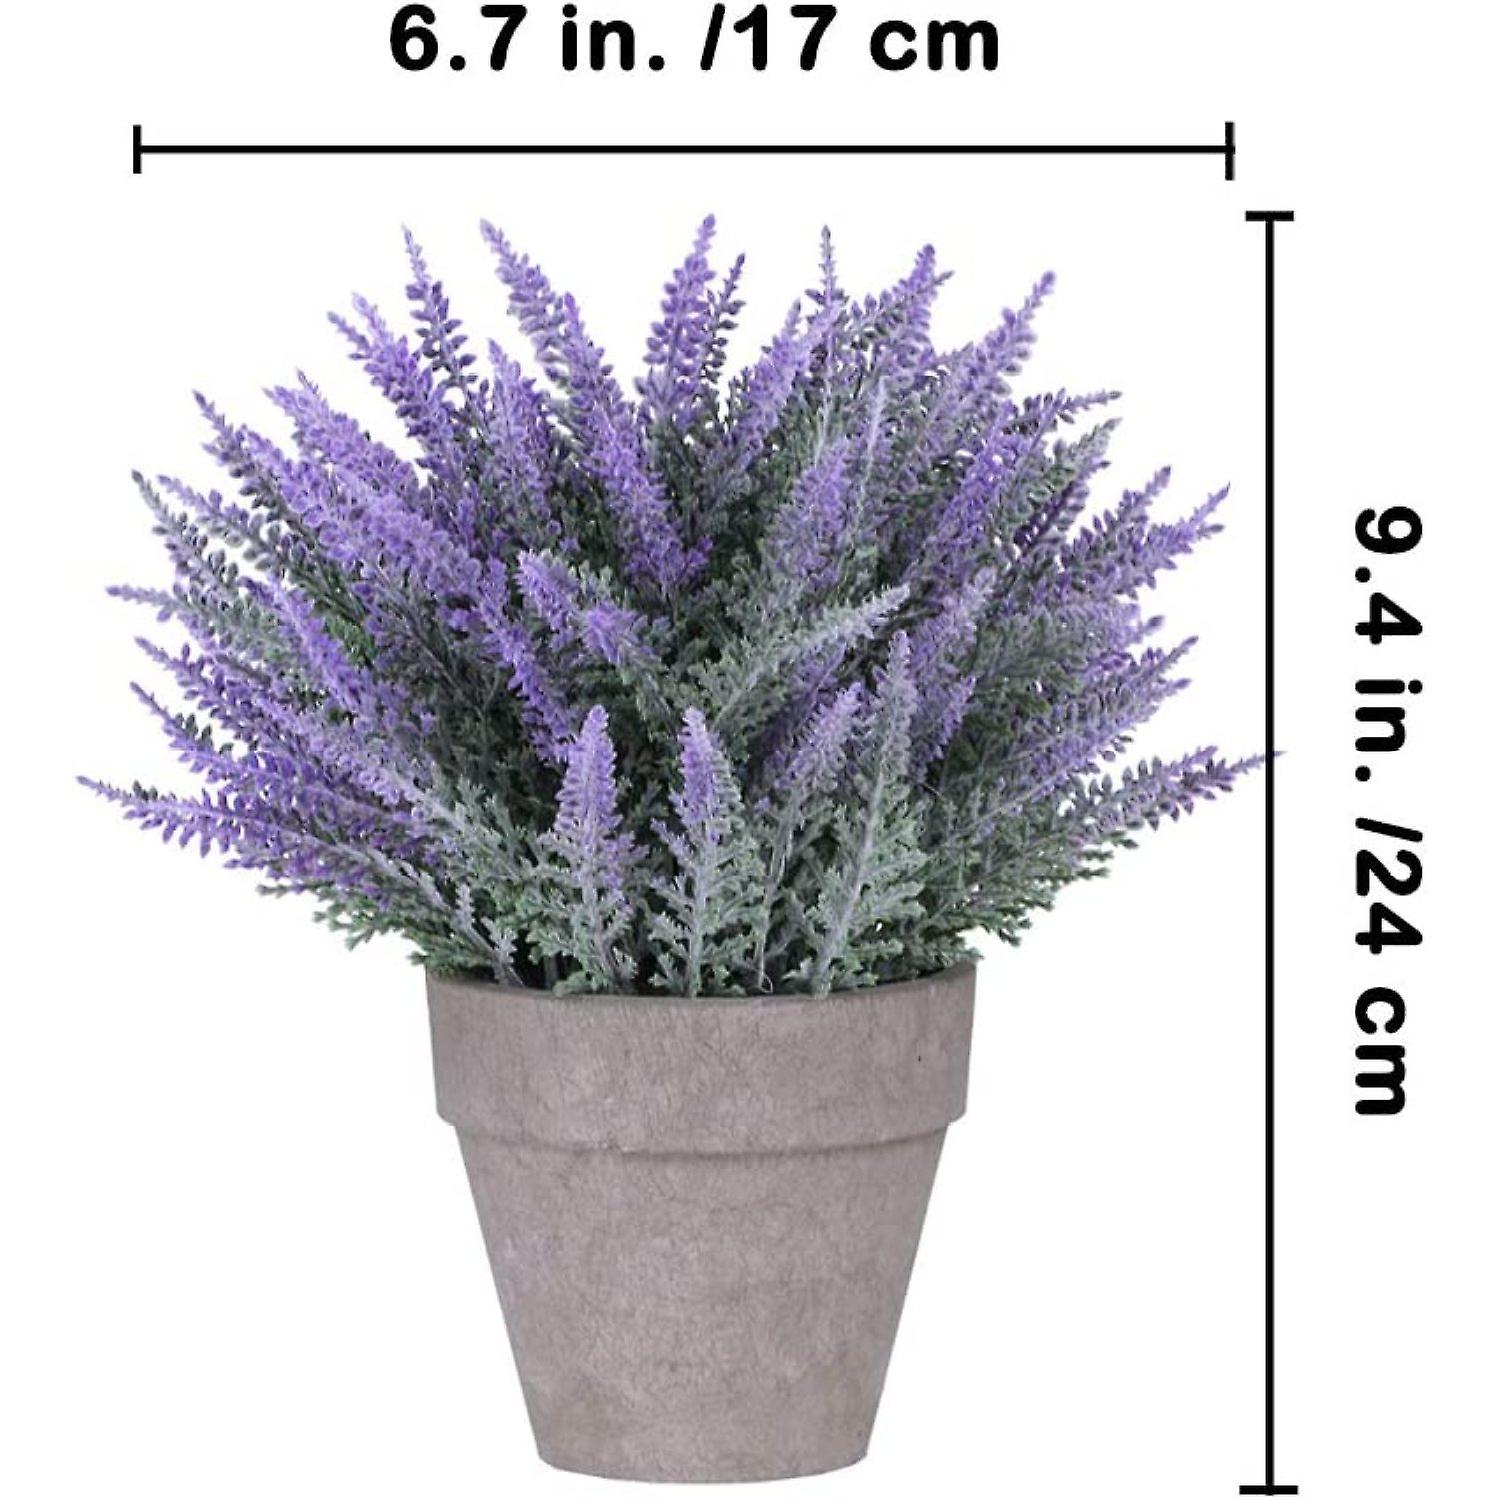 Set Of 3 Artificial Lavender Flower Grass Arrangements In Pots Assorted Fake Mini Potted Plants For Farmhouse Kitchen Office Bathroom Table Centerpiec